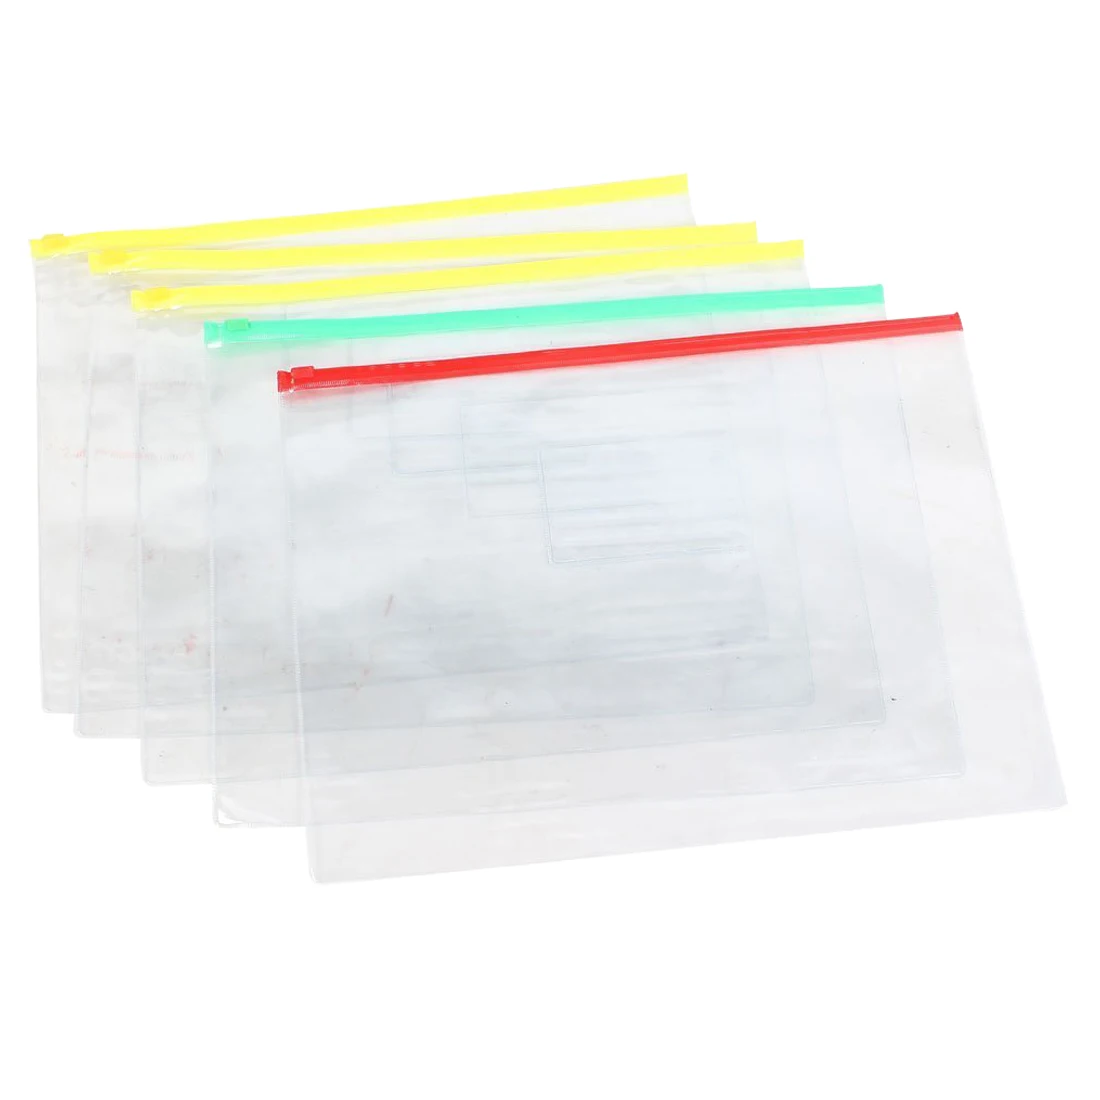 5 шт. прозрачный Пластик water proof пера A4 файл Бумага ziplock Сумки папки